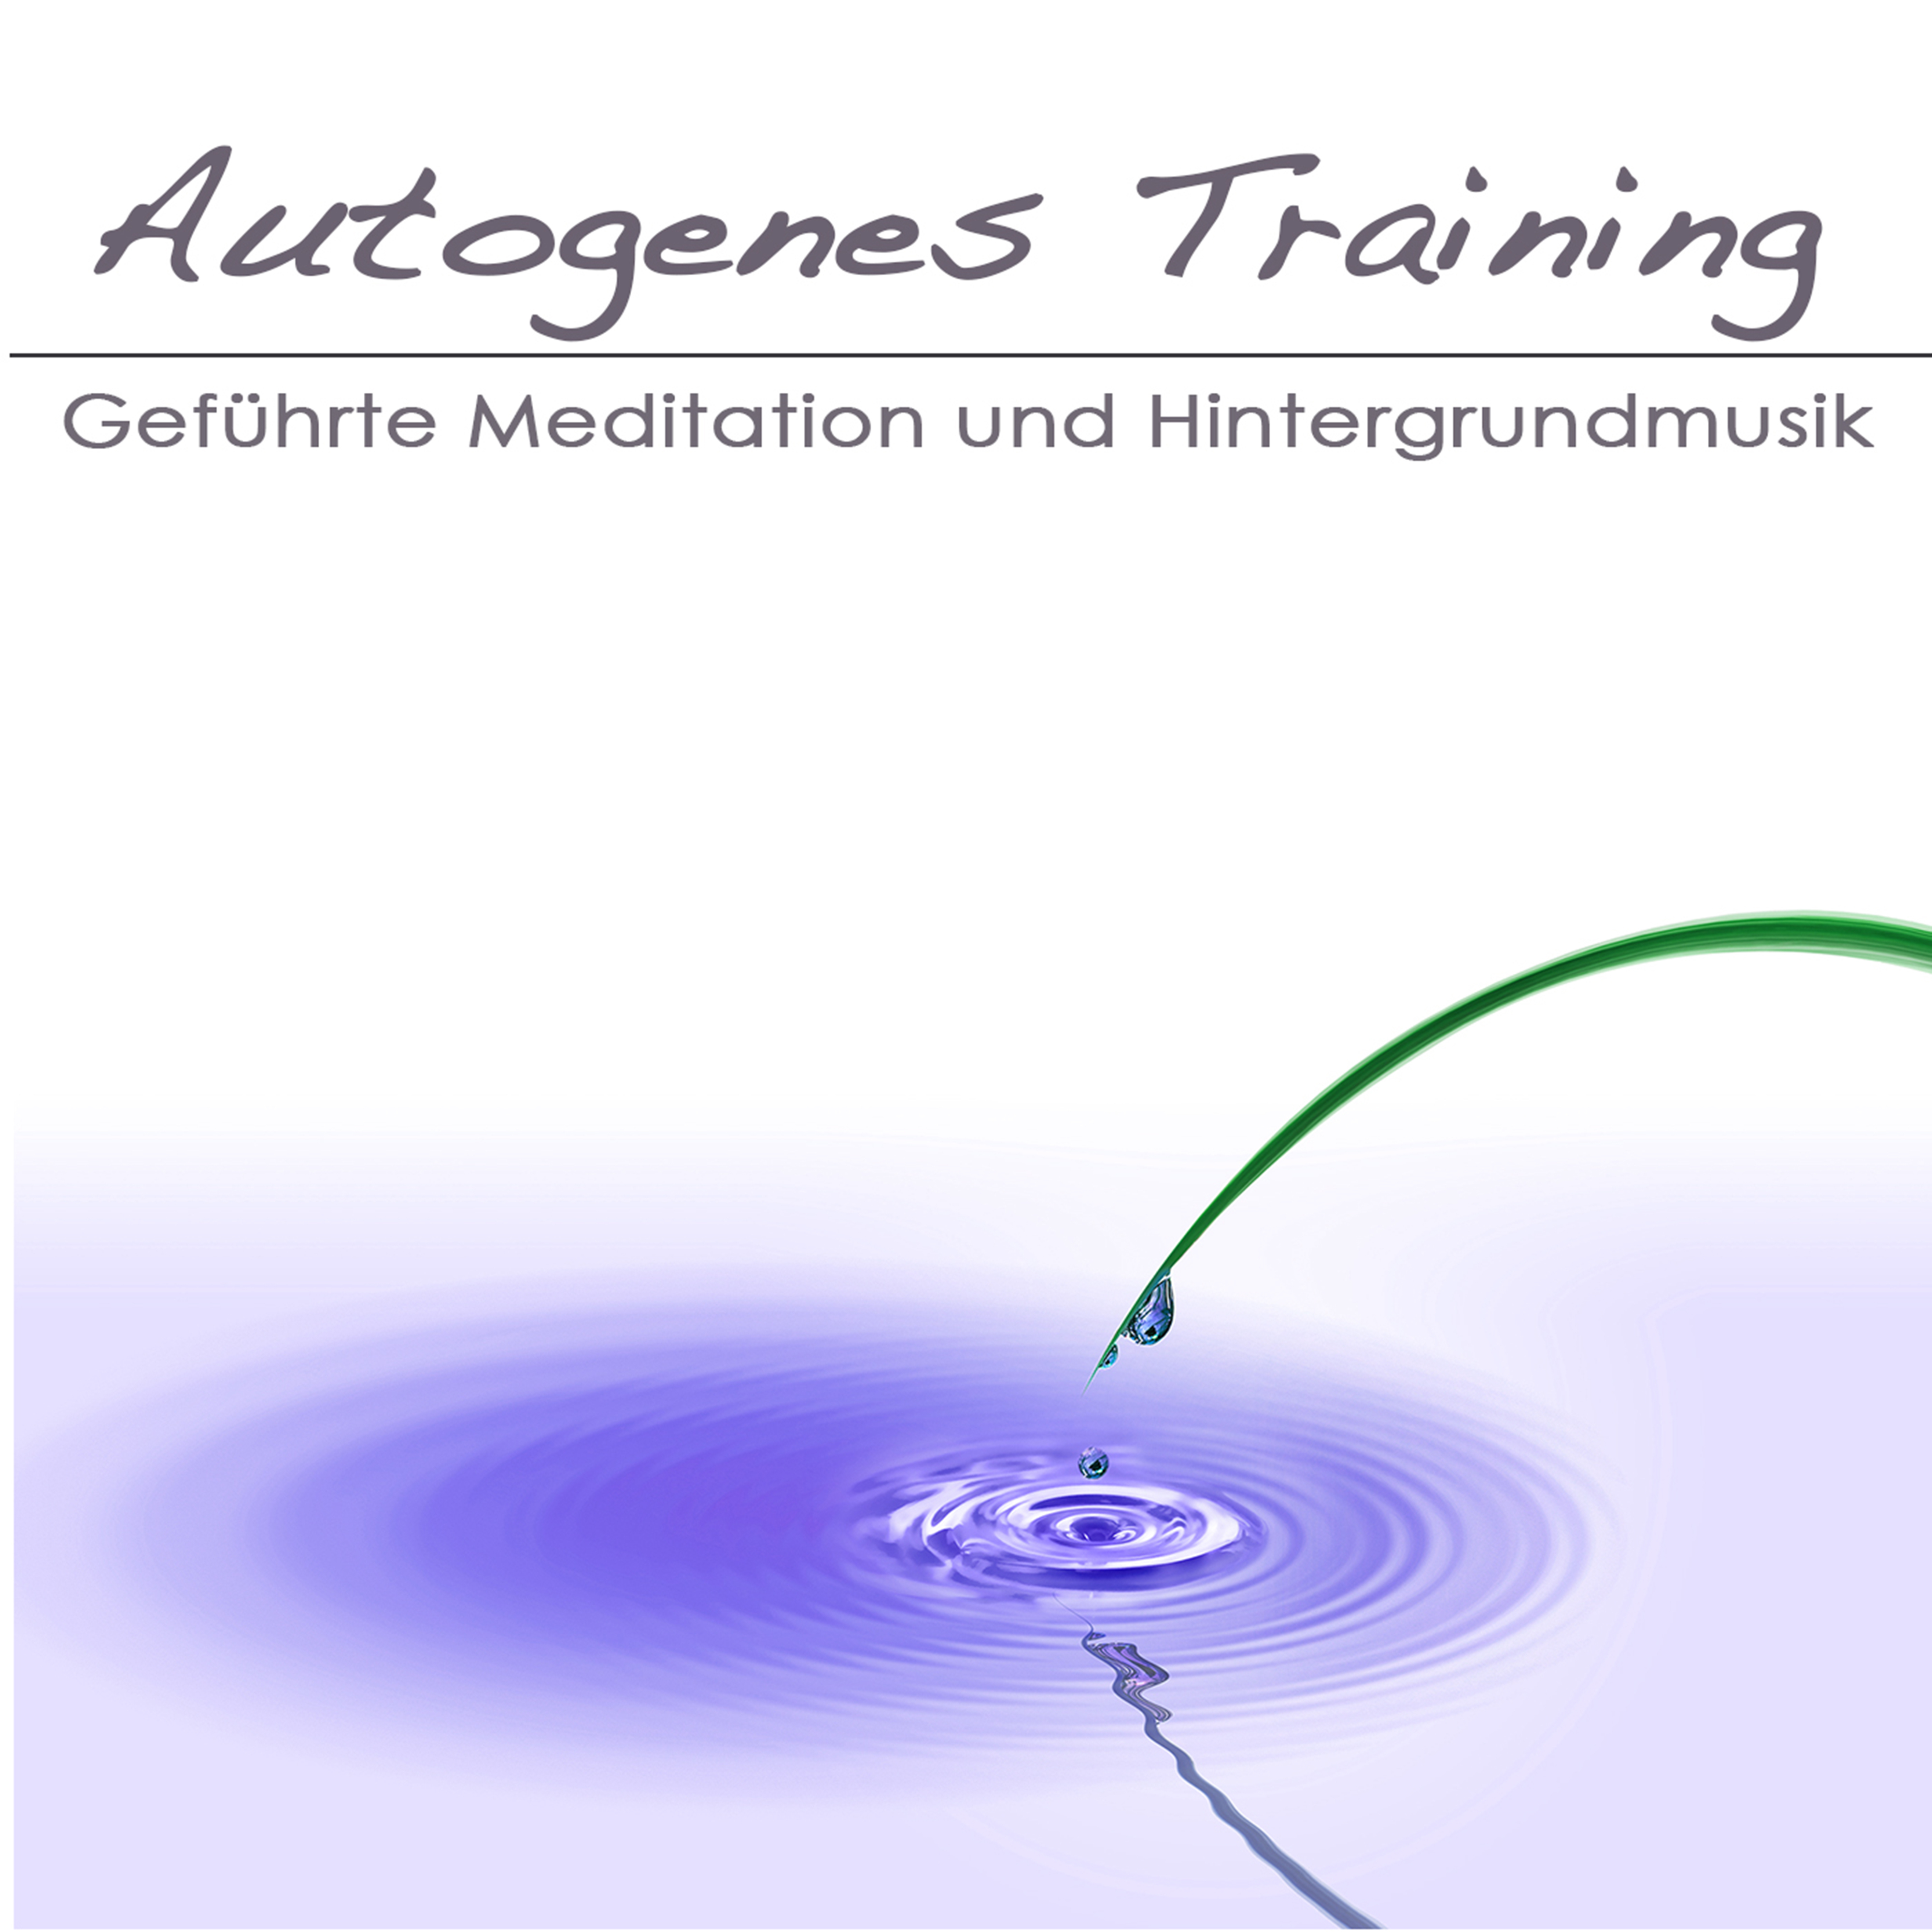 Autogenes Training  Gefü hrte Meditation und Hintergrundmusik fü r Autogenic Training